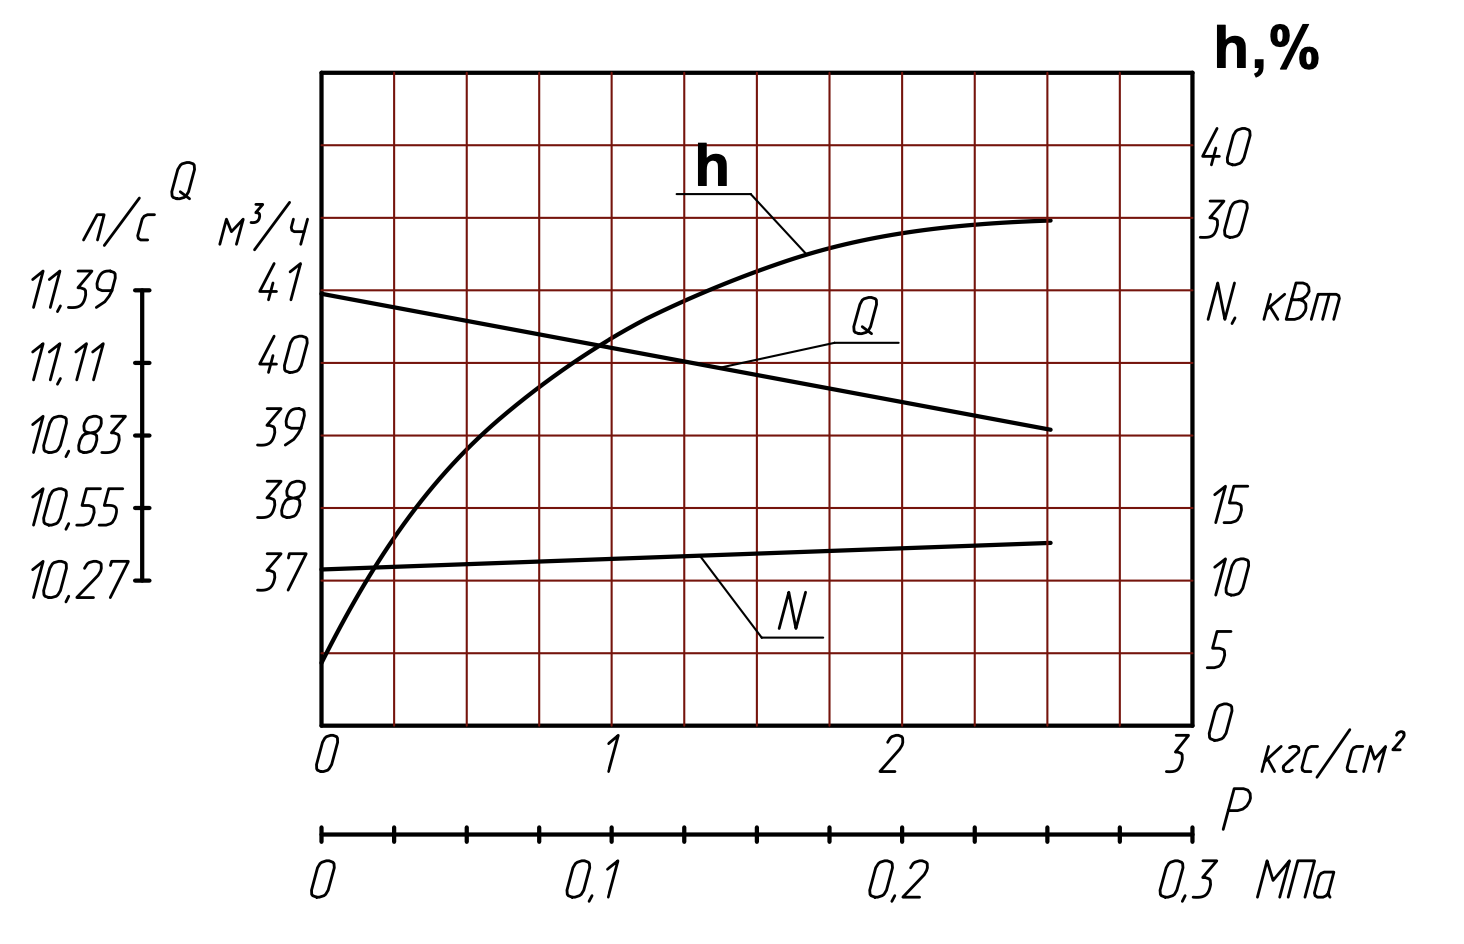 Характеристика электронасосных агрегатов Ш 80-2,5-37,5/2,5 на мазуте